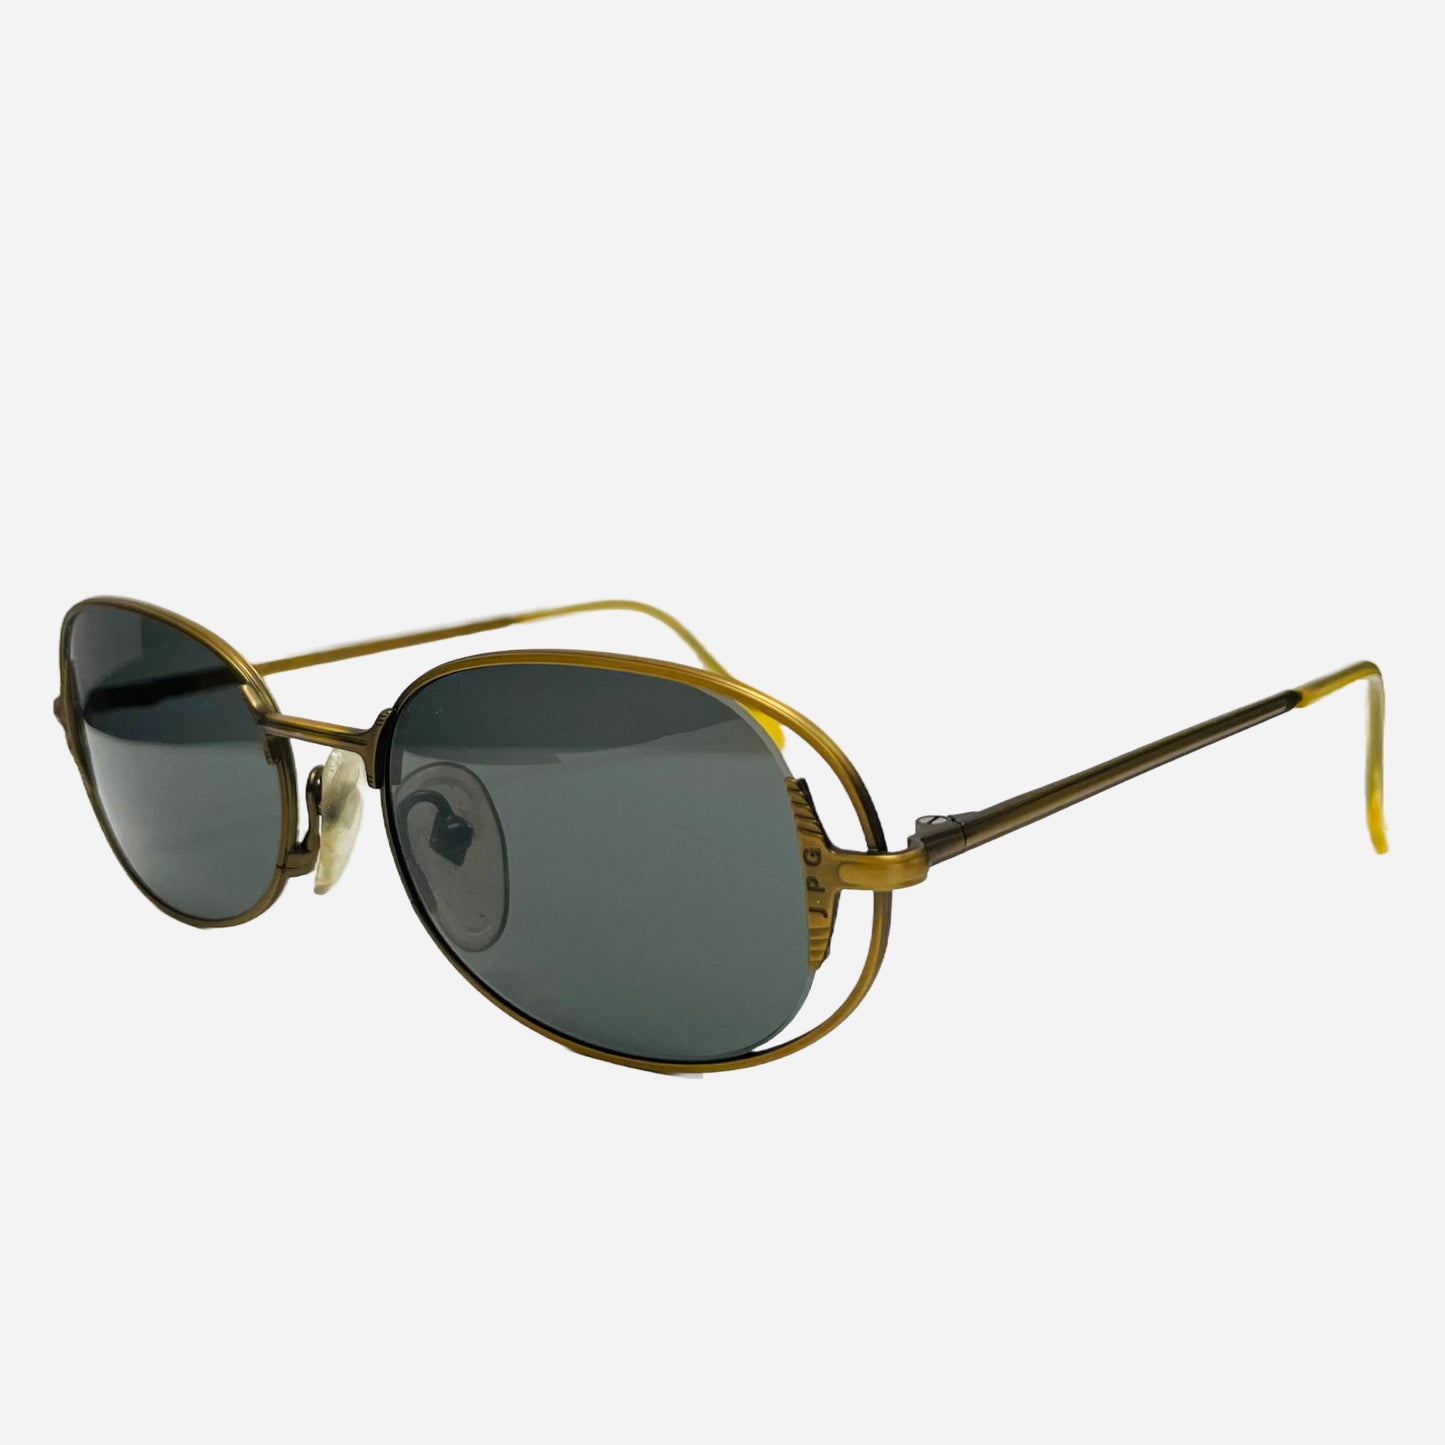 Vintage-Jean-Paul-Gaultier-Sonnenbrille-Sunglasses-Model56-3172-made-in-japan-the-seekers-front-side